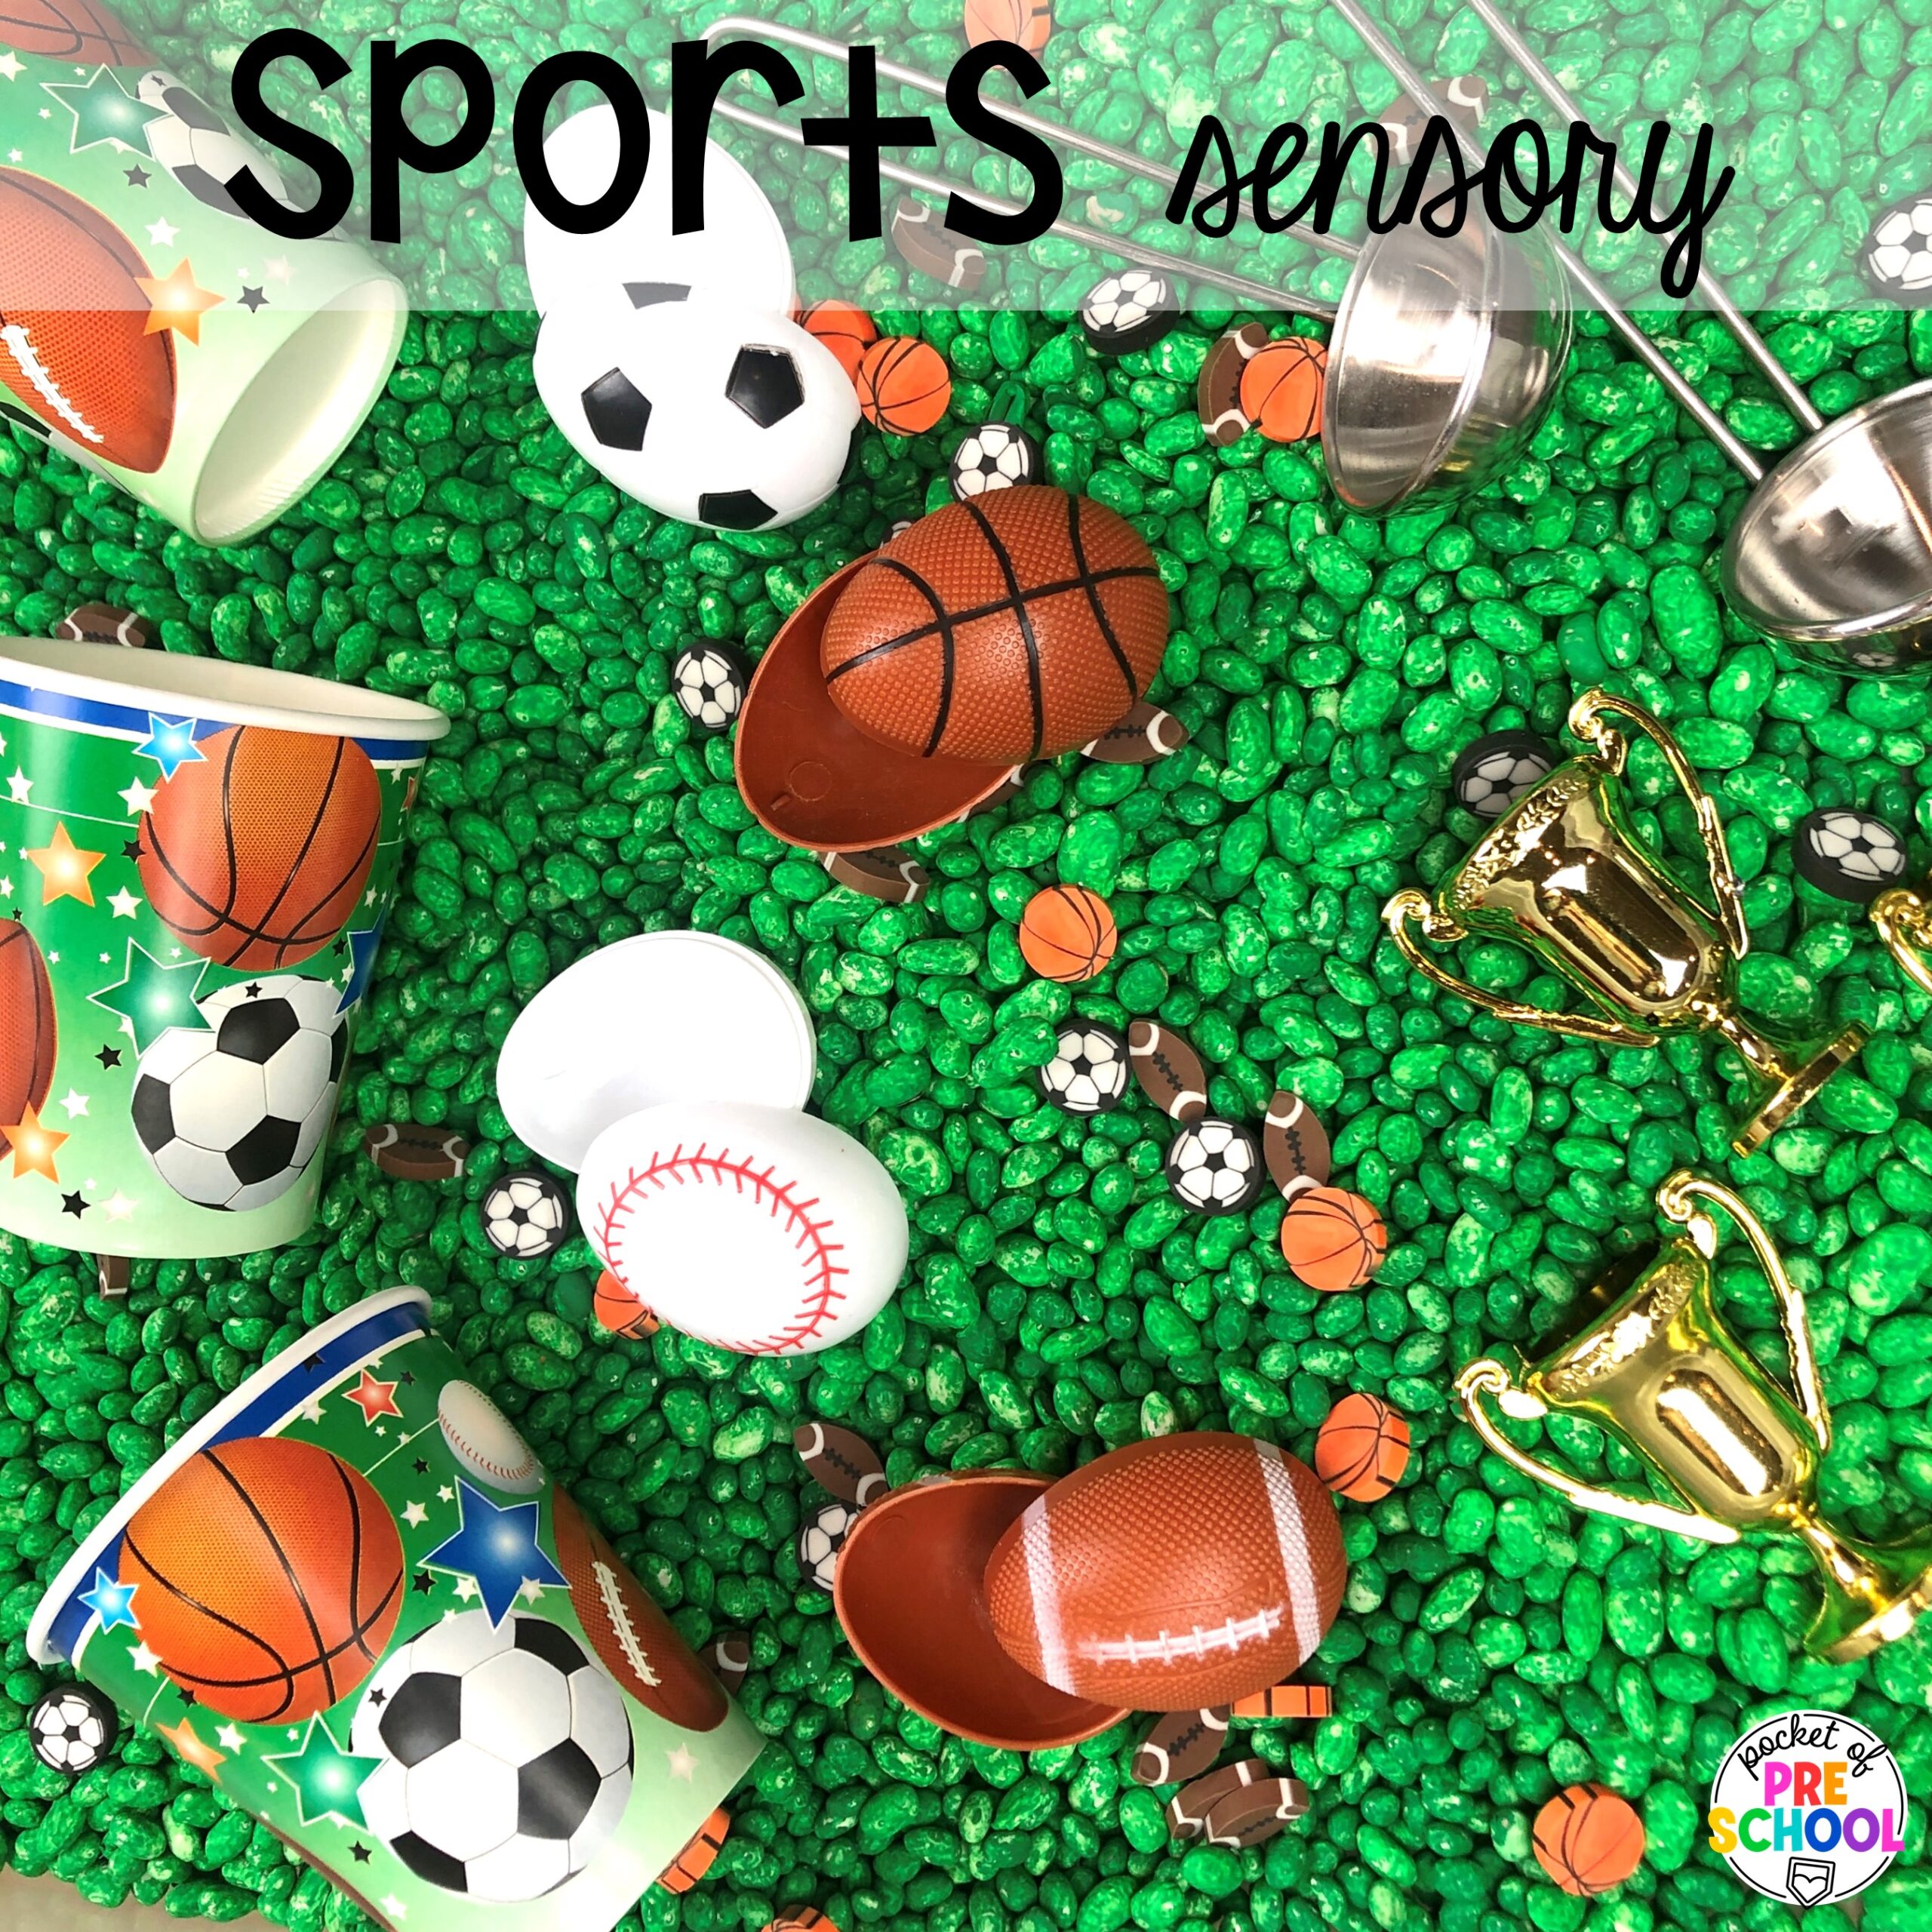 Sports sensory bin or sensory table! Sports themed preschool, pre-k, a& kindergarten activities for math, literacy, fine motor, and more!